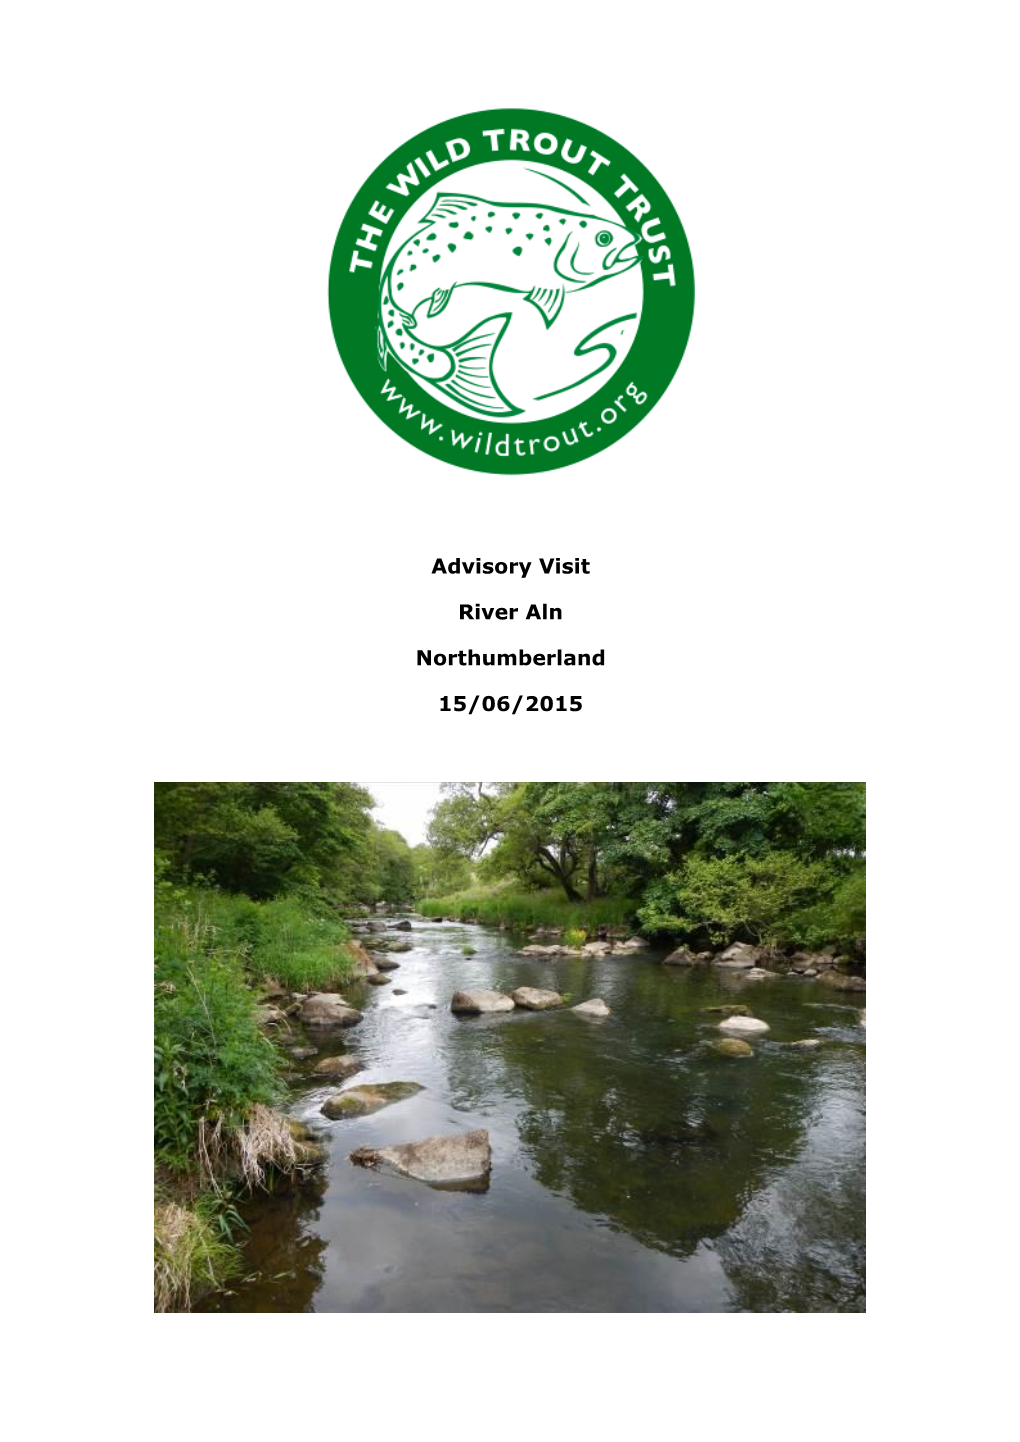 Advisory Visit River Aln Northumberland 15/06/2015